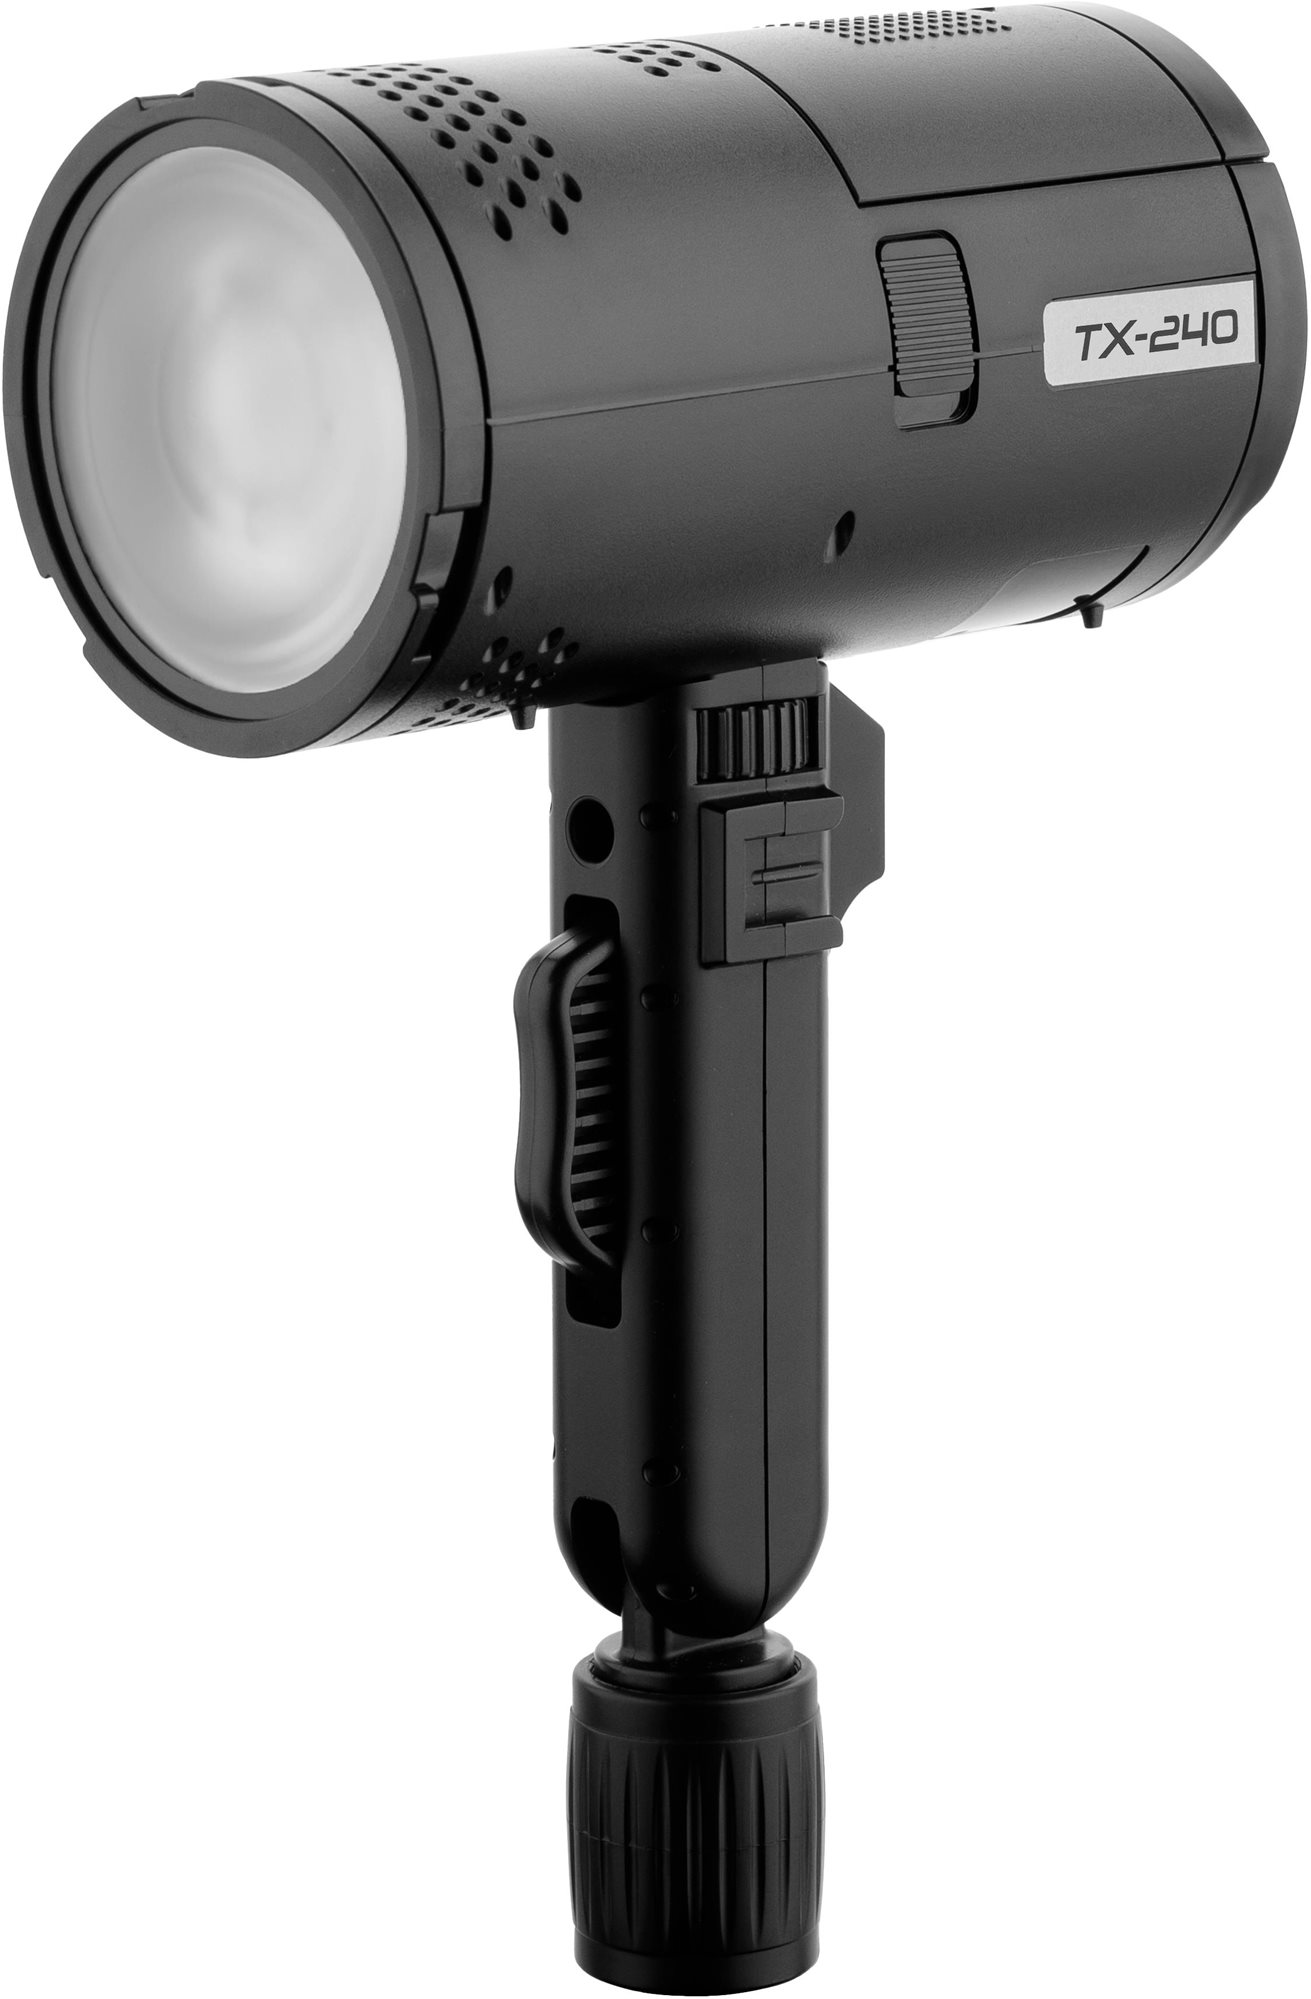 Stúdió lámpa FOMEI Digitalis Pro TX240